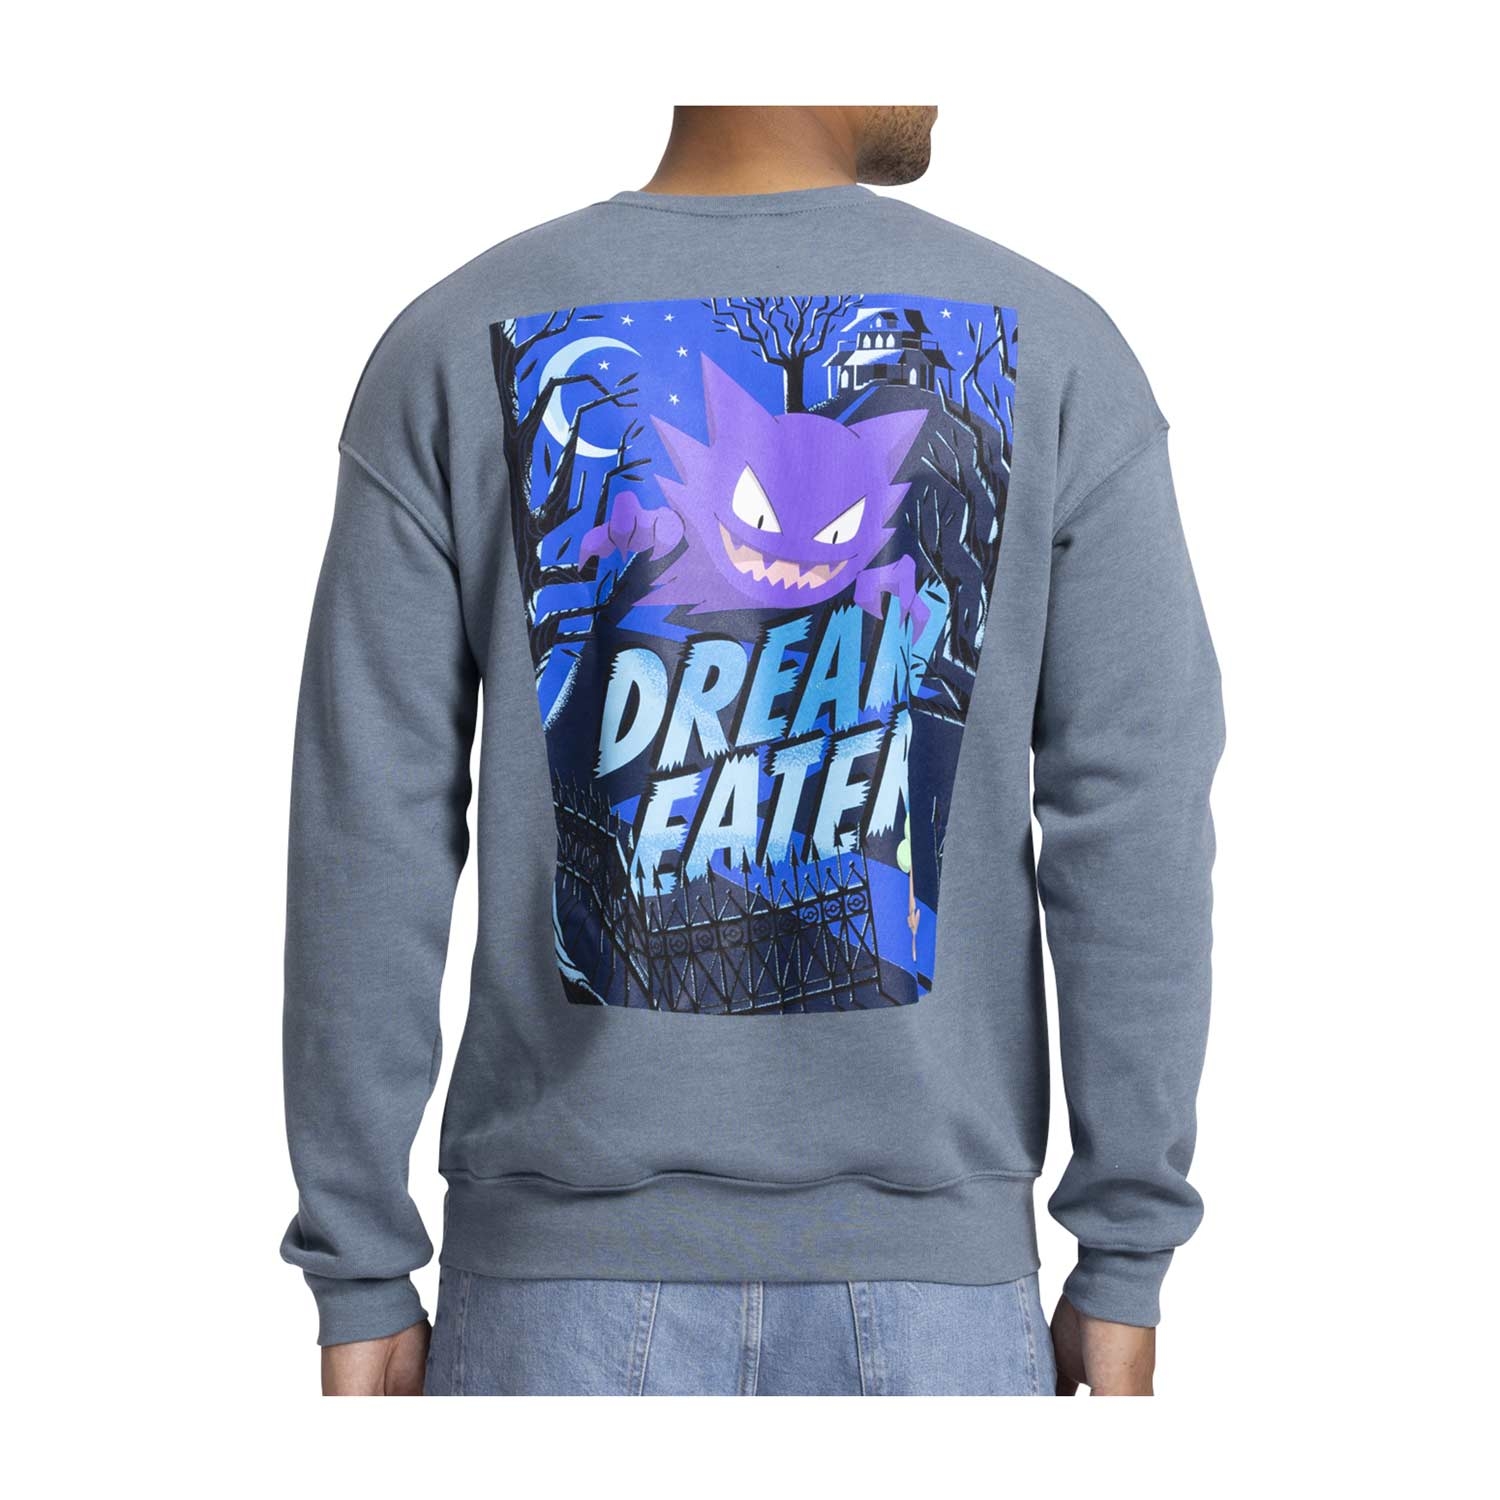 Haunter - Dream Eater - Pokémon Cinema Scares - Oversize Sweatshirt - Adult.jpg